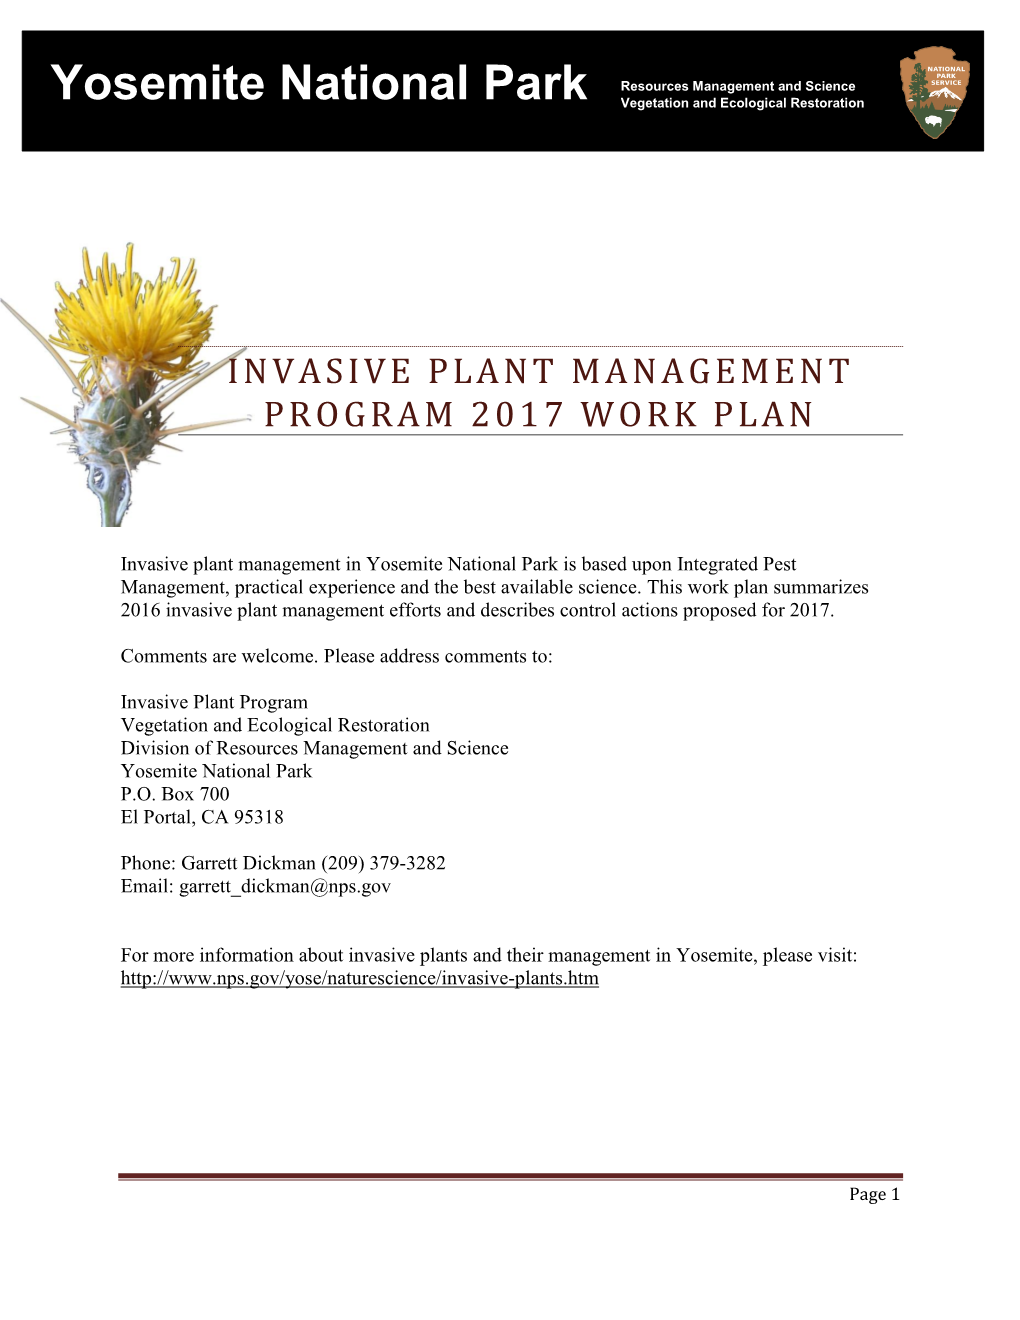 Invasive Plant Management Program 2017 Work Plan